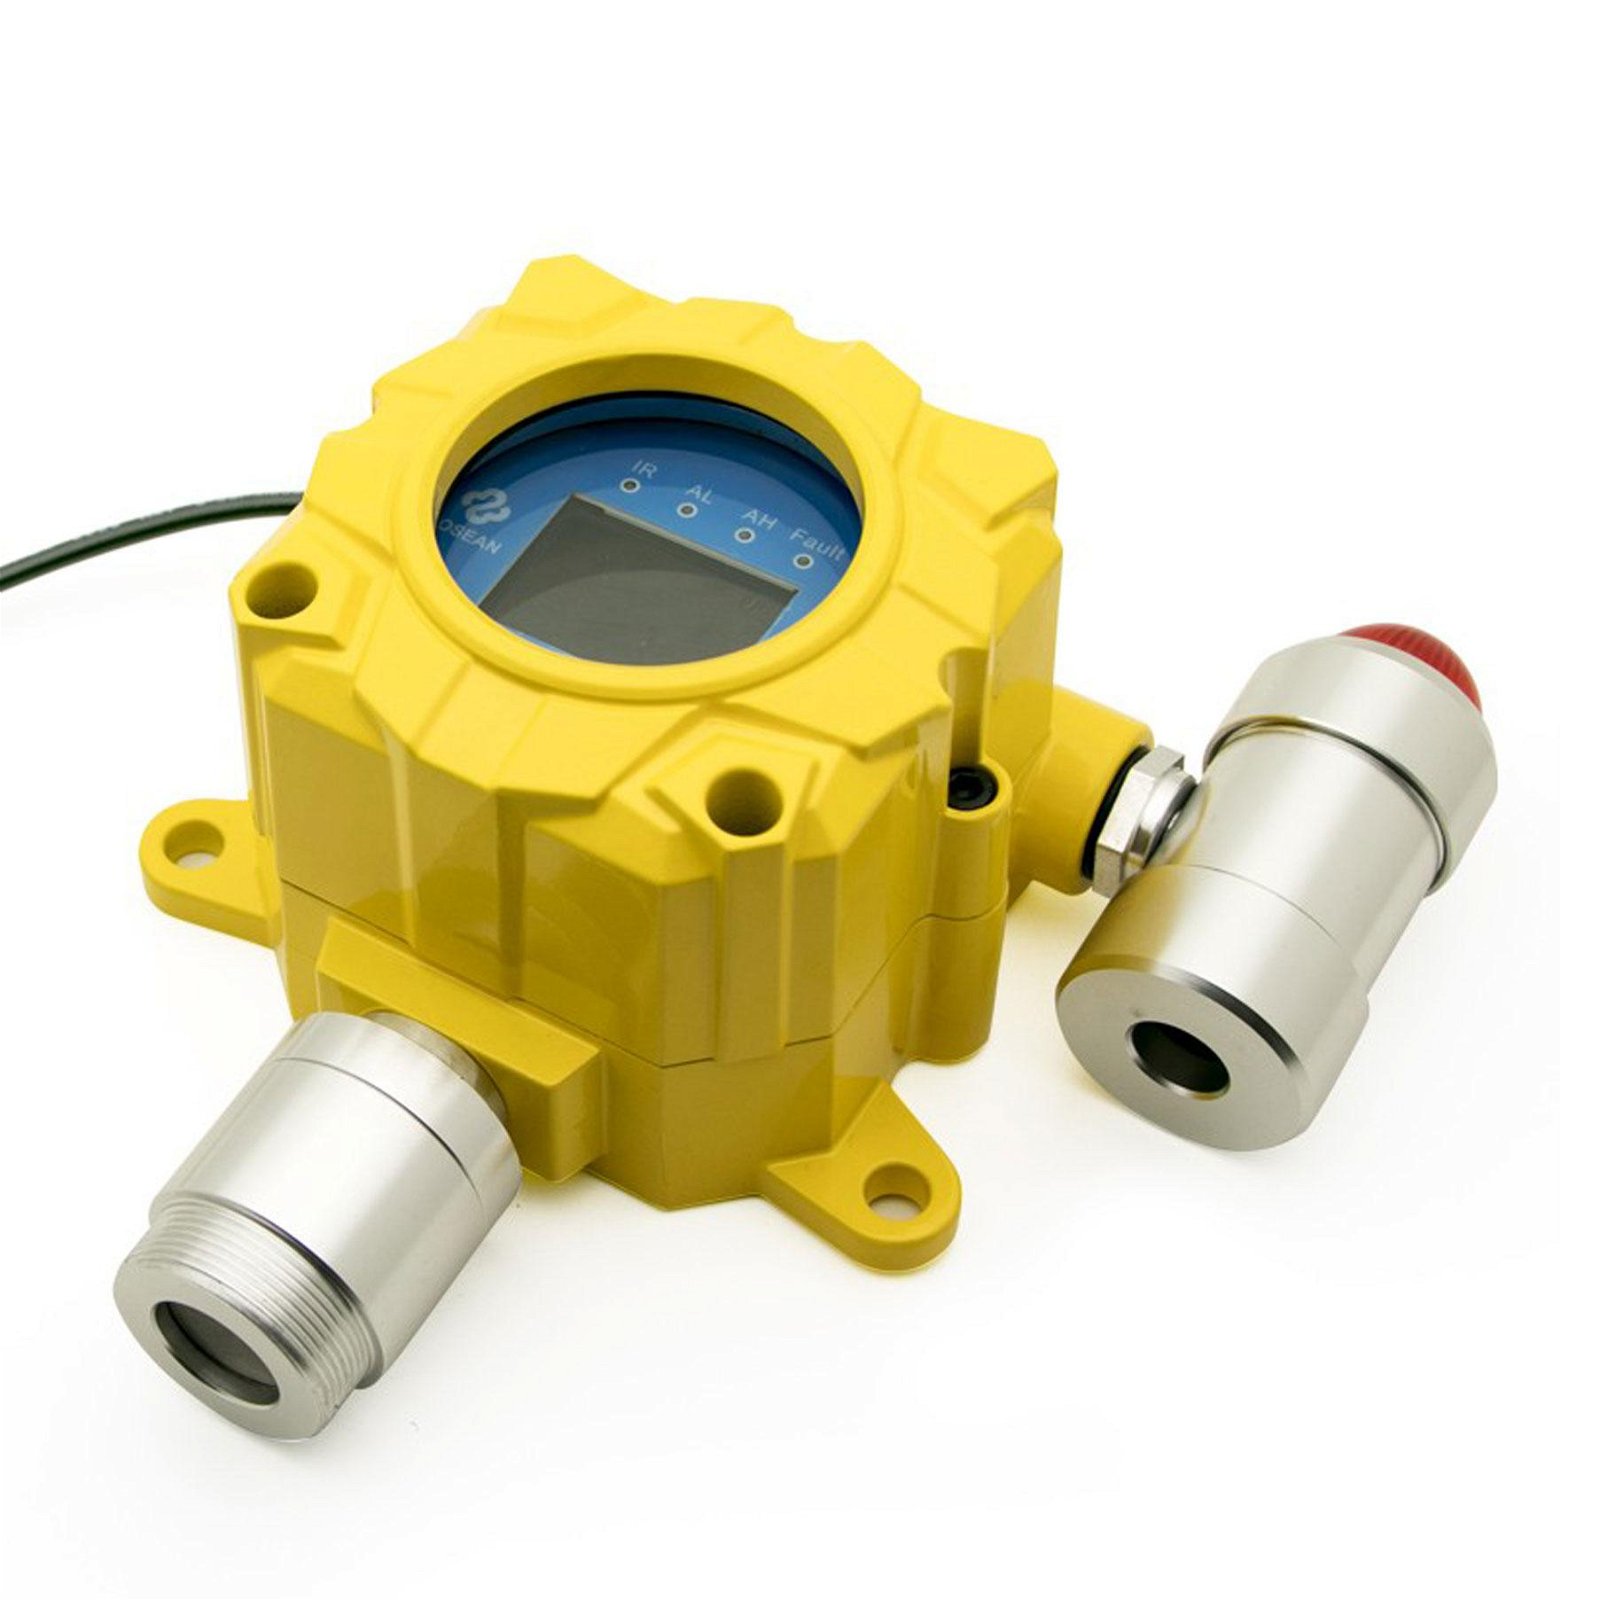 K-G60 Fixed H2S Gas Detector Hydrogen sulfide Gas alarm Monitor Remote Control 4